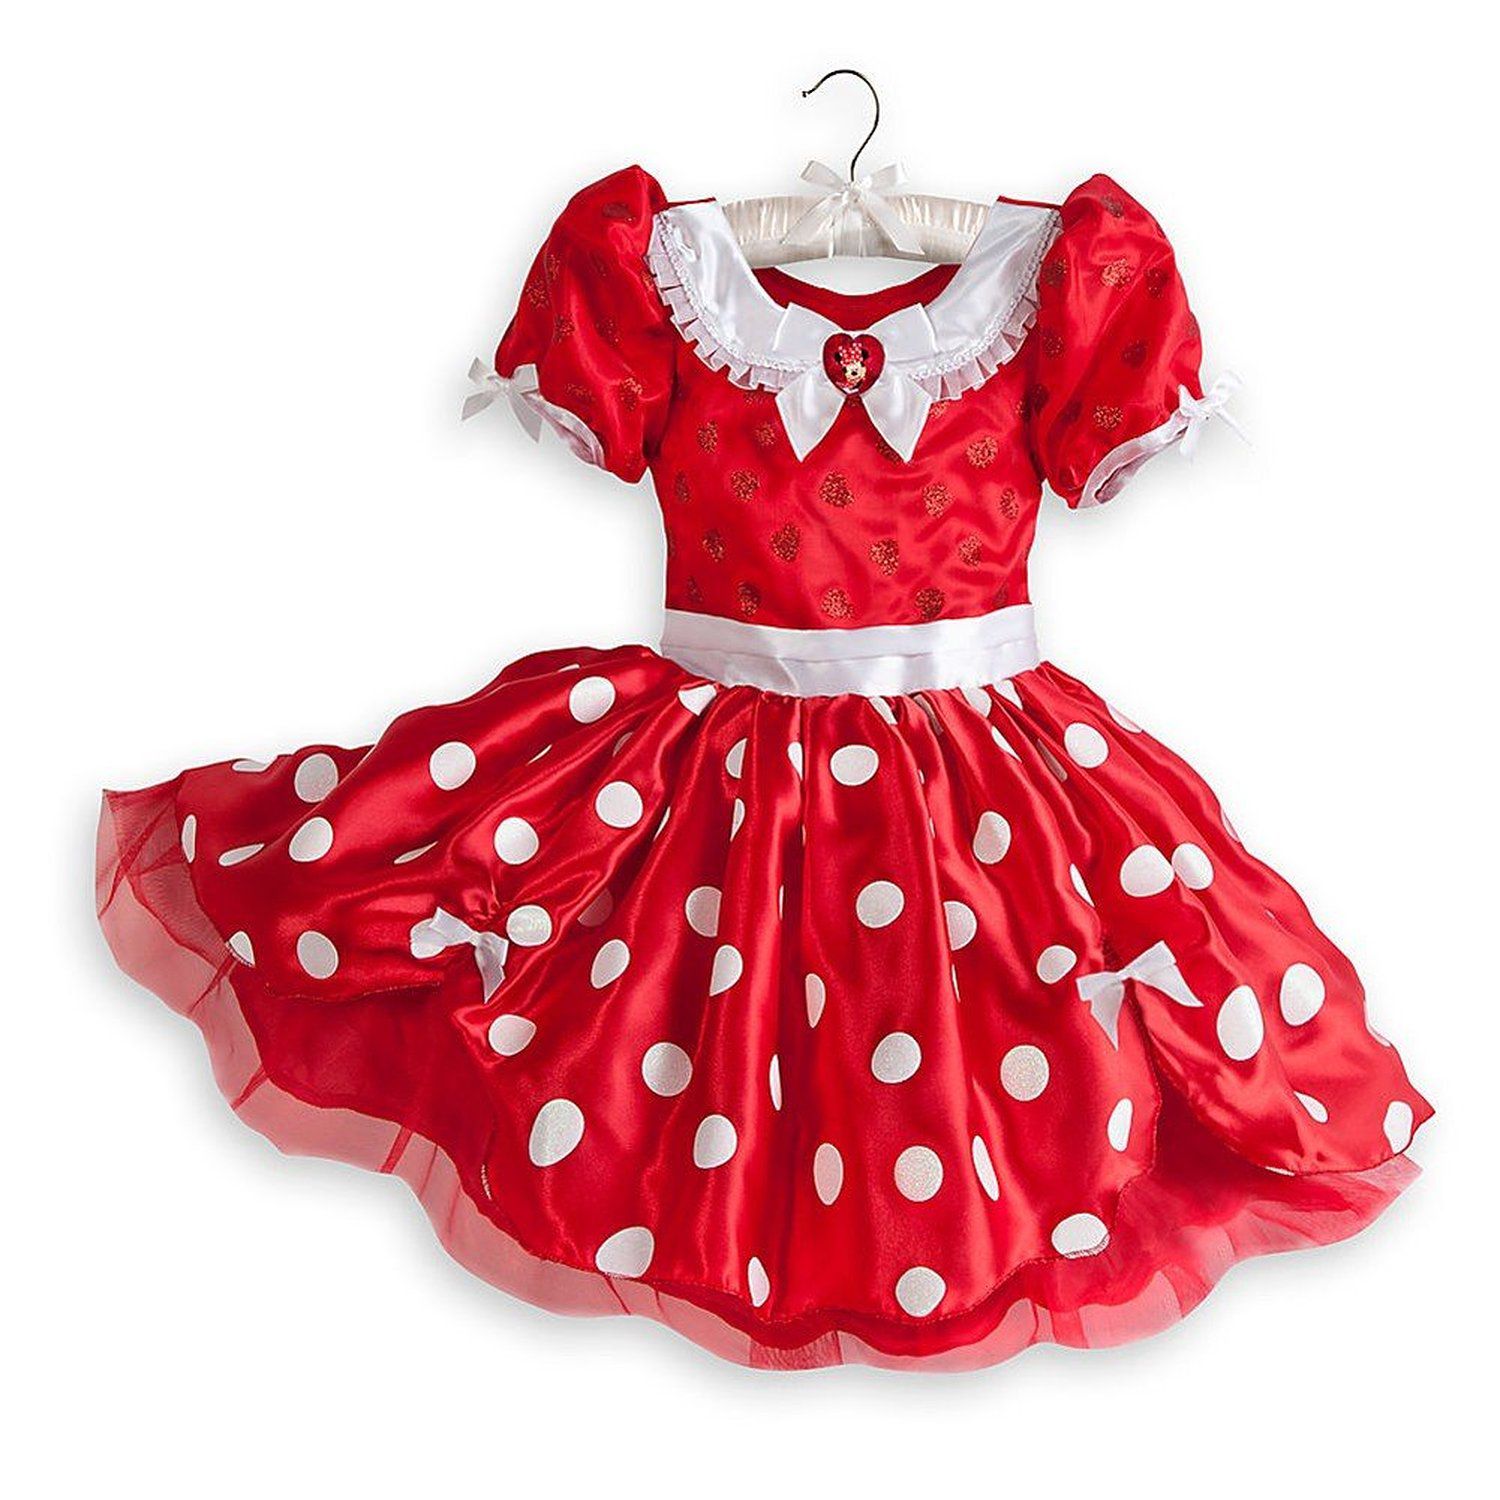 Disney Store Minnie Mouse Costume Dress Size Xxs 33t Red With White Polkadots Buy Disney